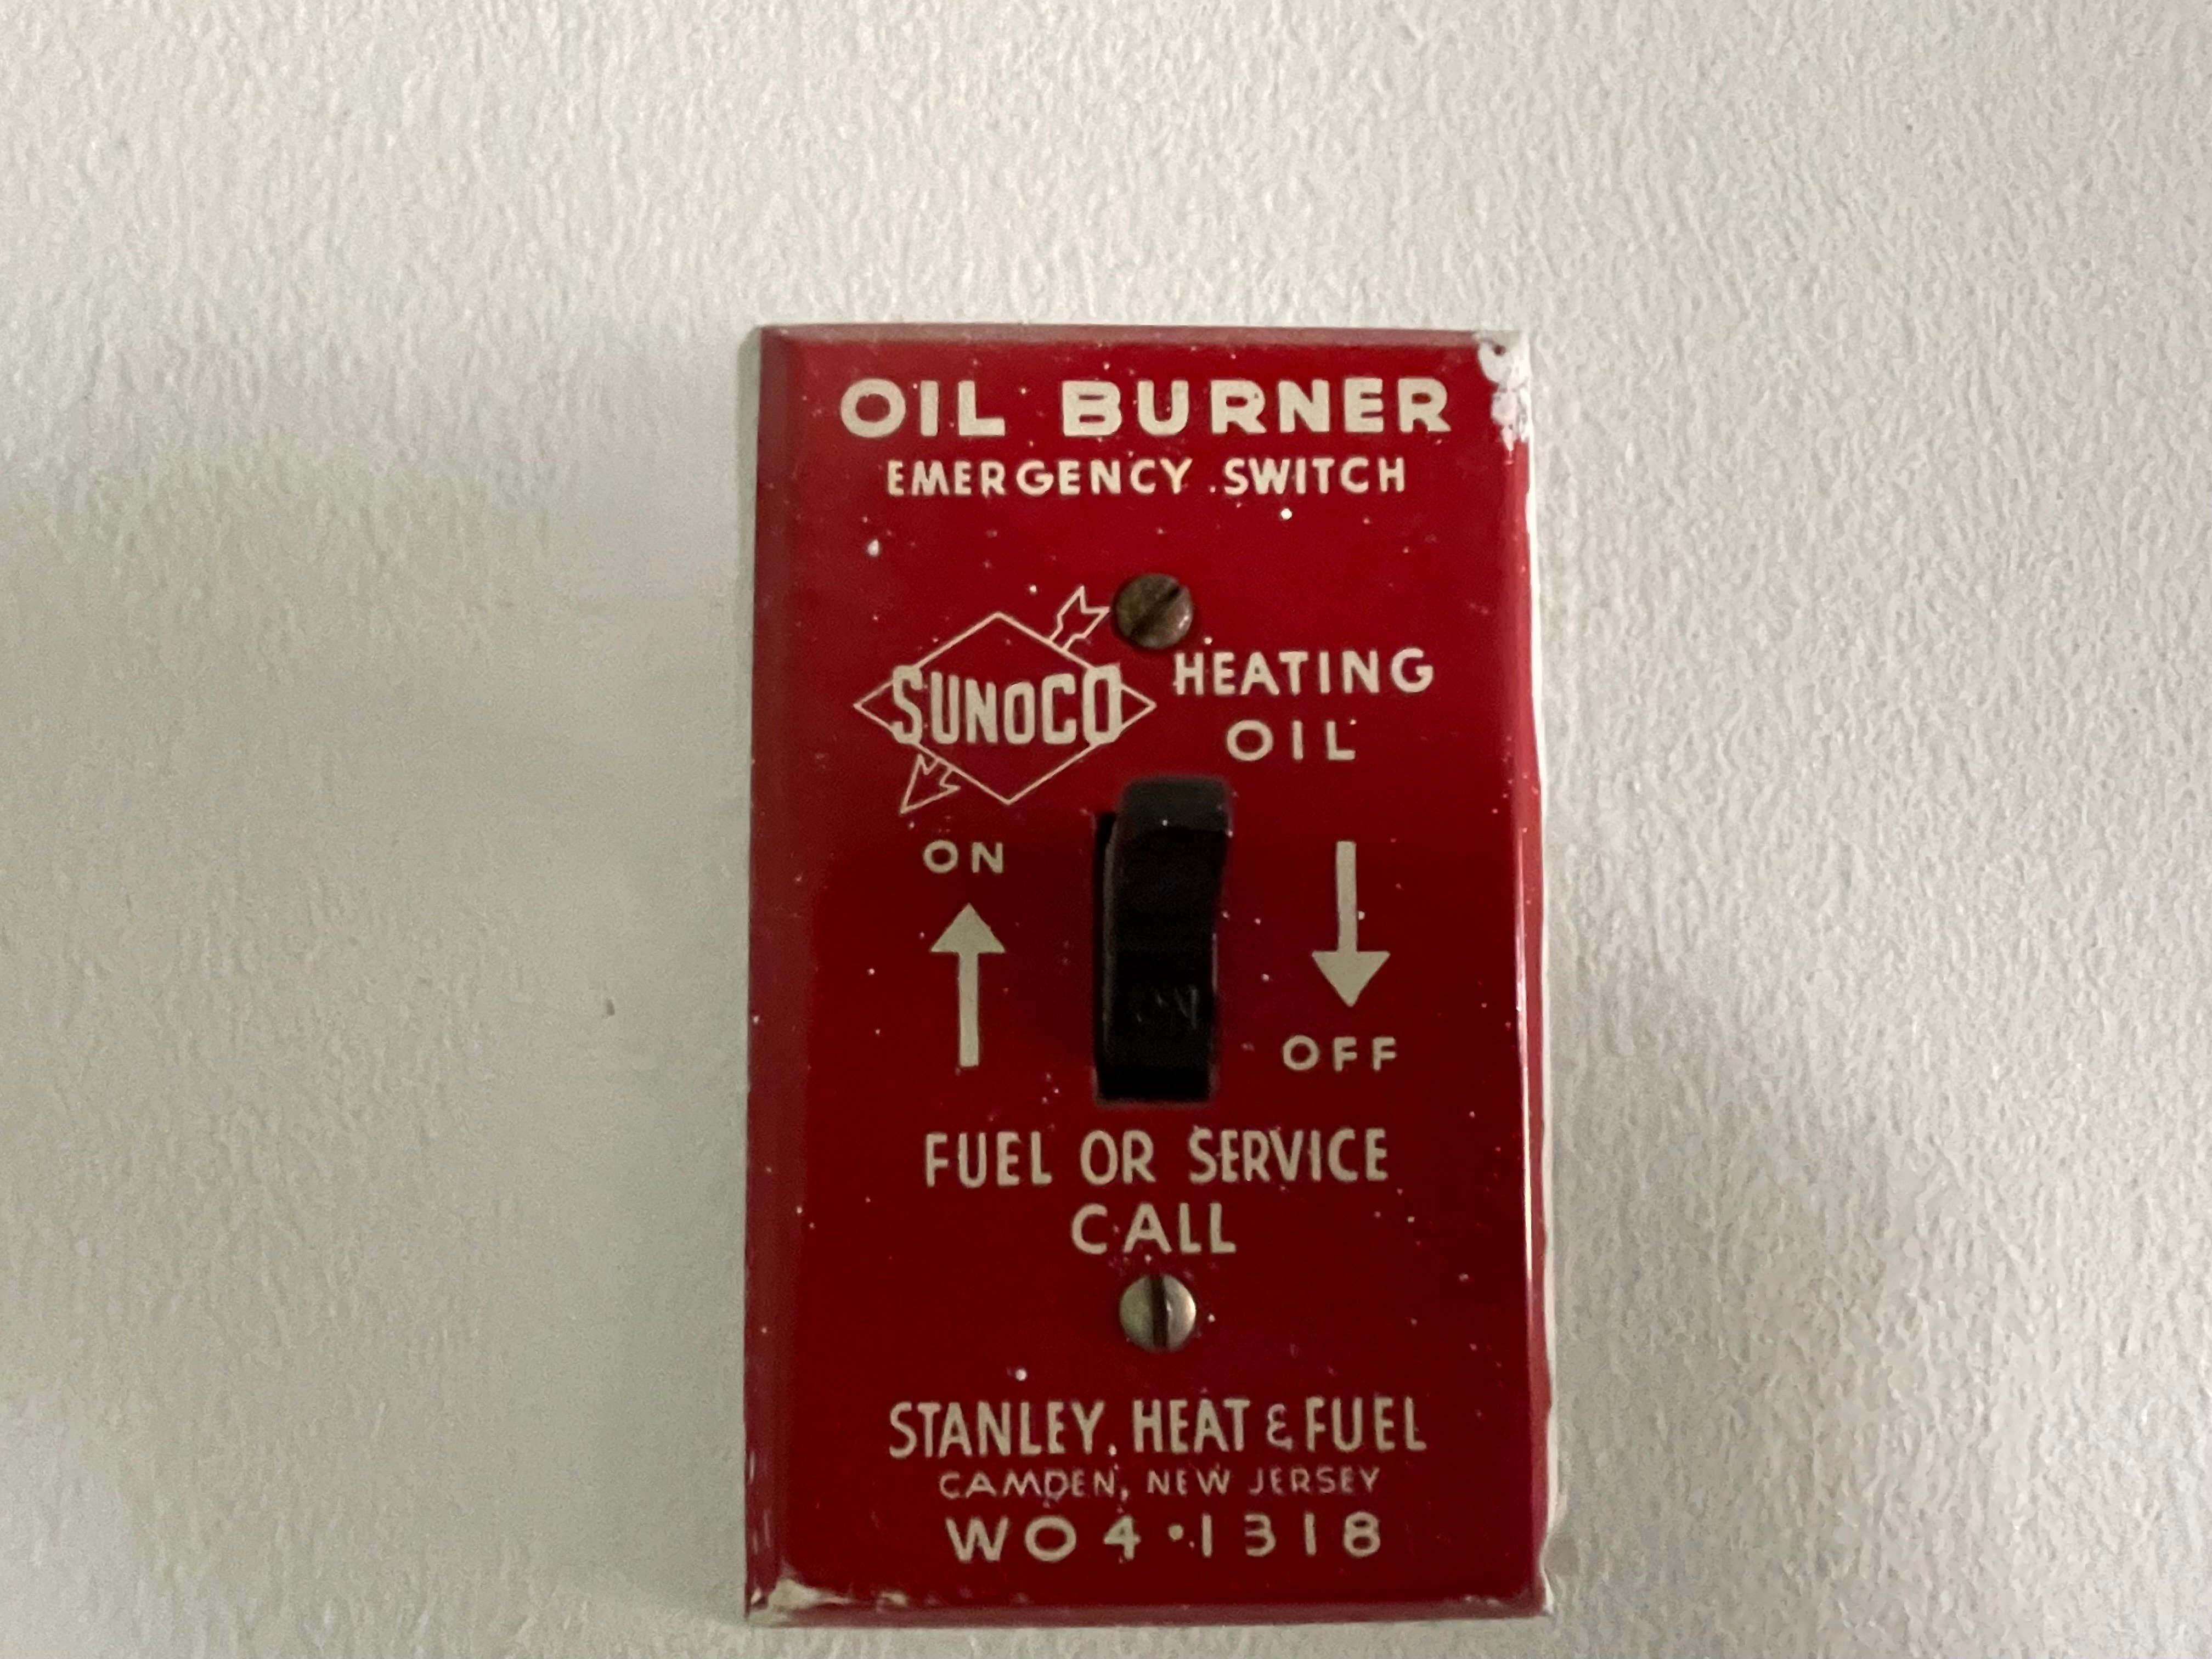 Oil Burner Emergency Switch